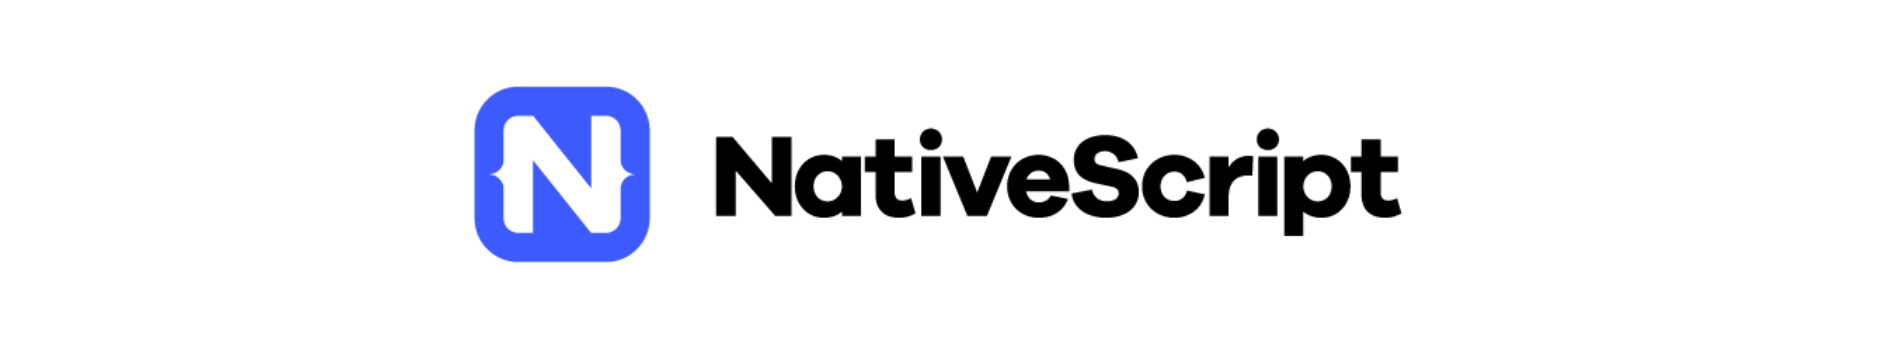 native-script-framework-jscrambler-blog